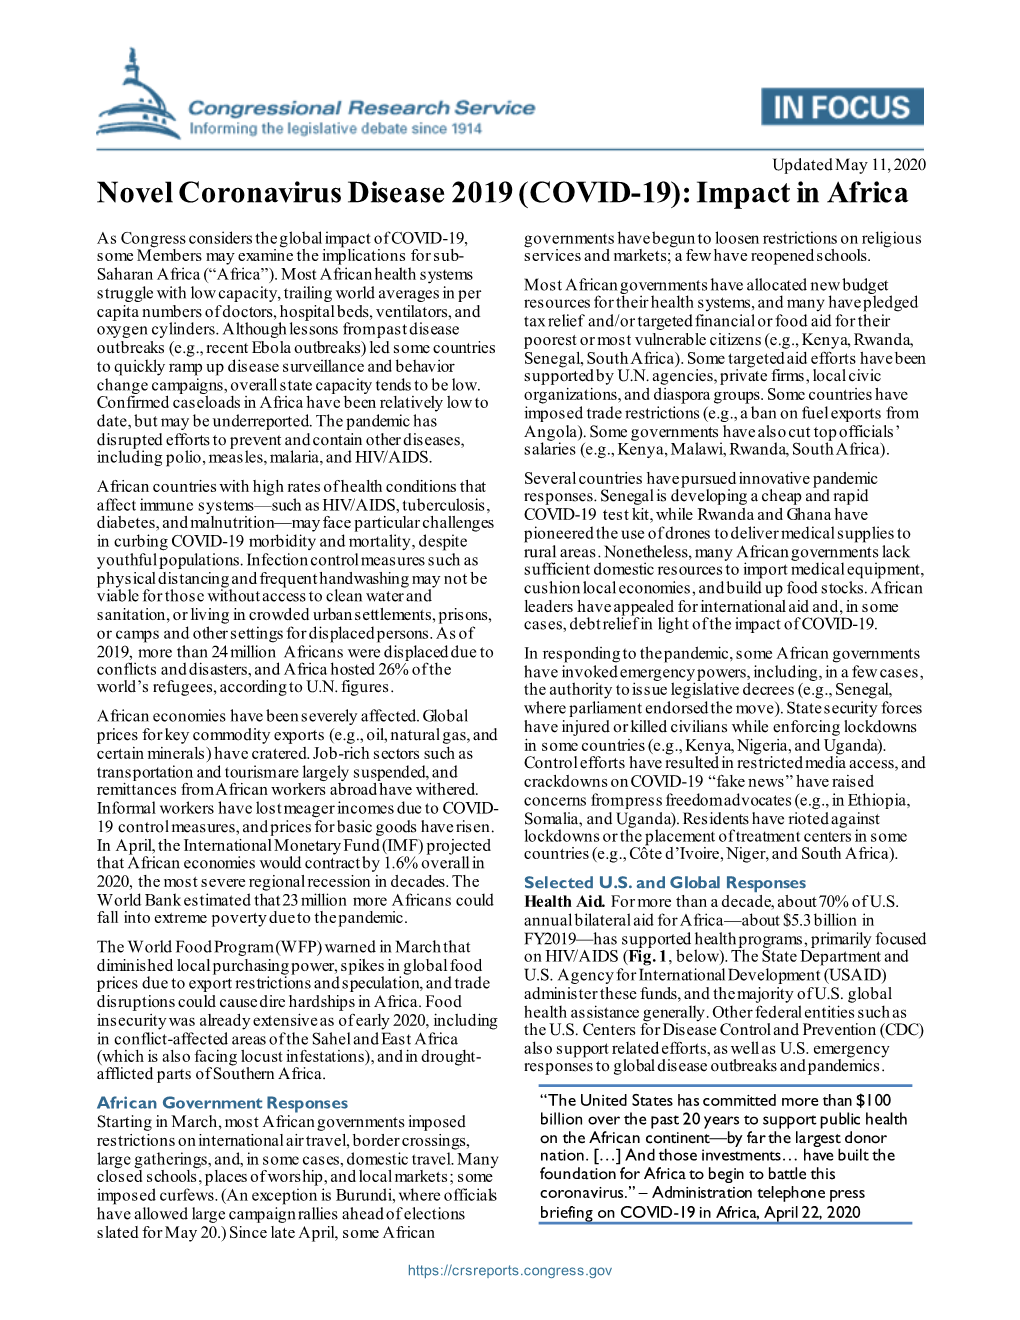 Novel Coronavirus Disease 2019 (COVID-19): Impact in Africa